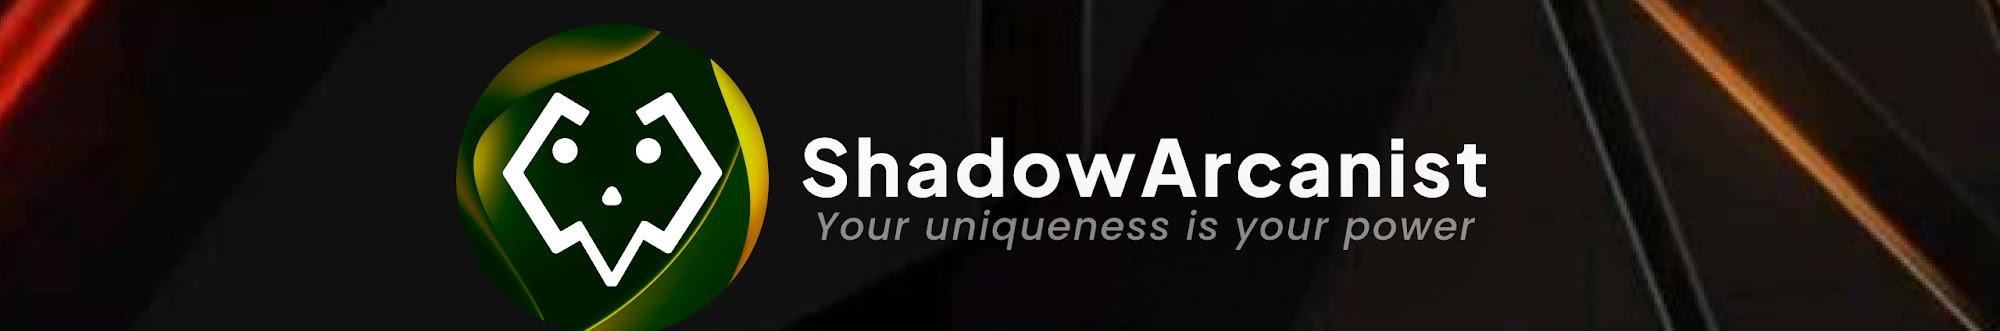 ShadowArcanist